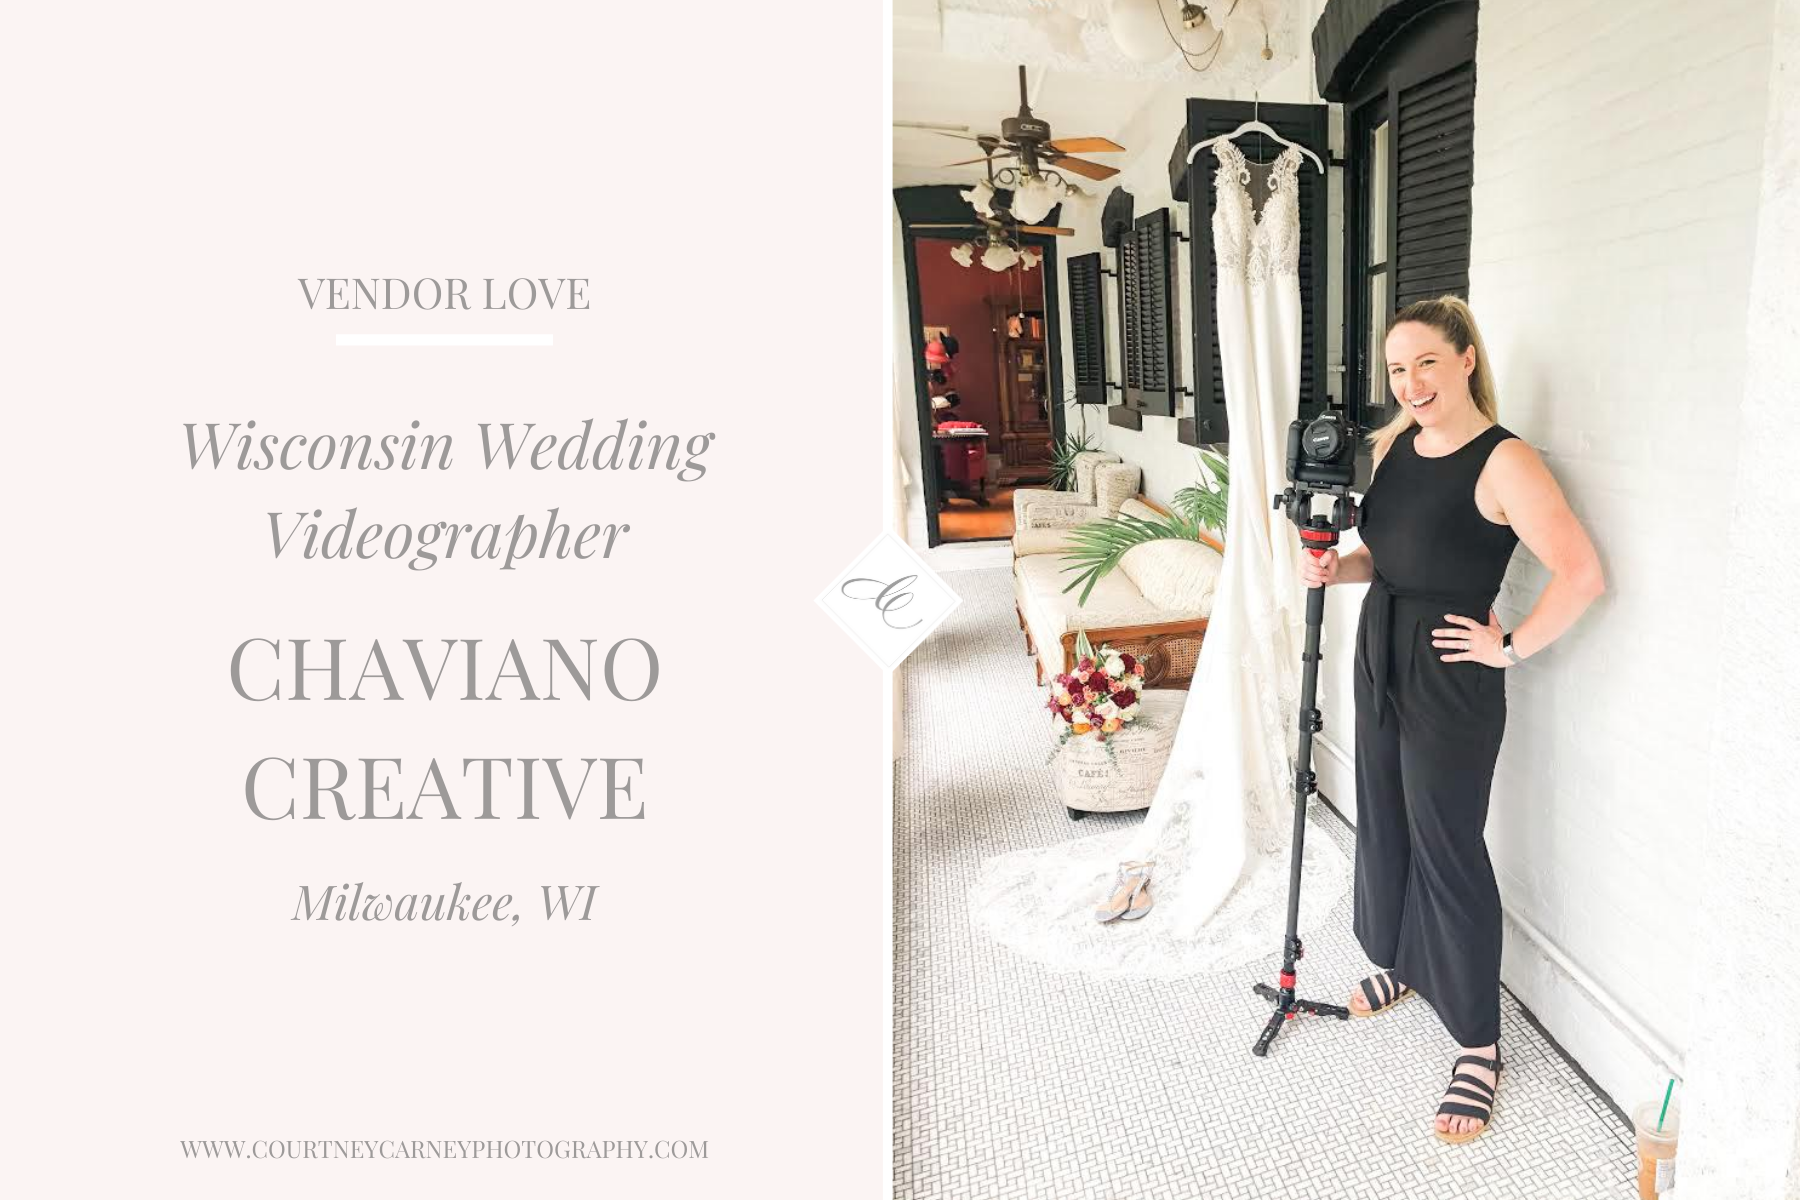 Wisconsin Wedding Videographer Chaviano Creative